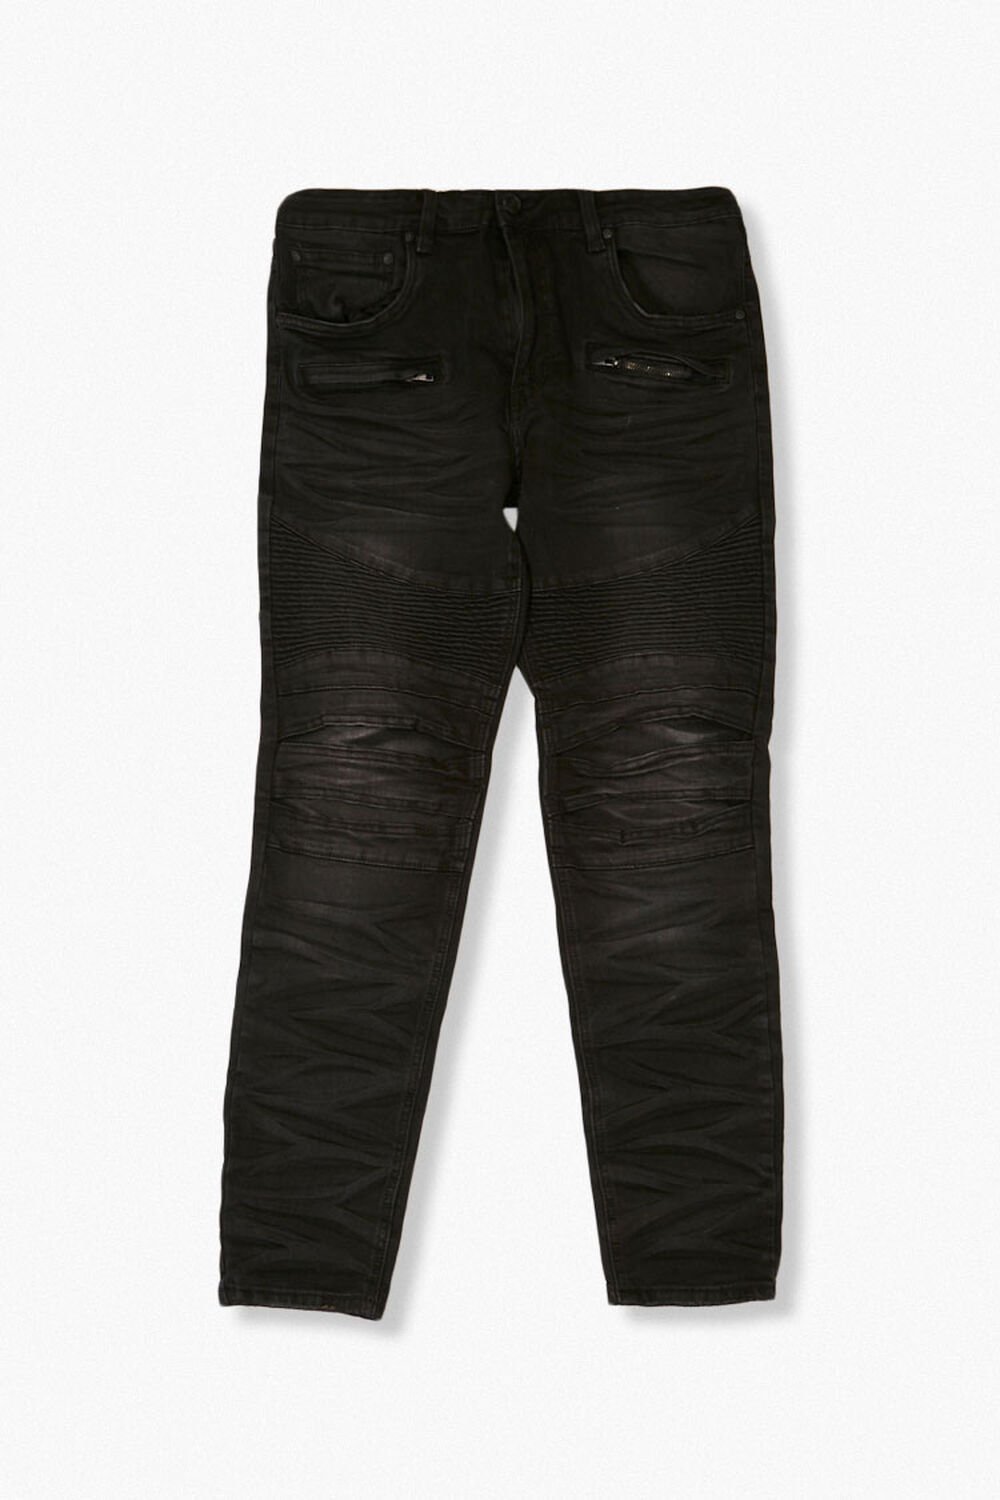 BLACK Faded Slim-Fit Moto Jeans, image 1